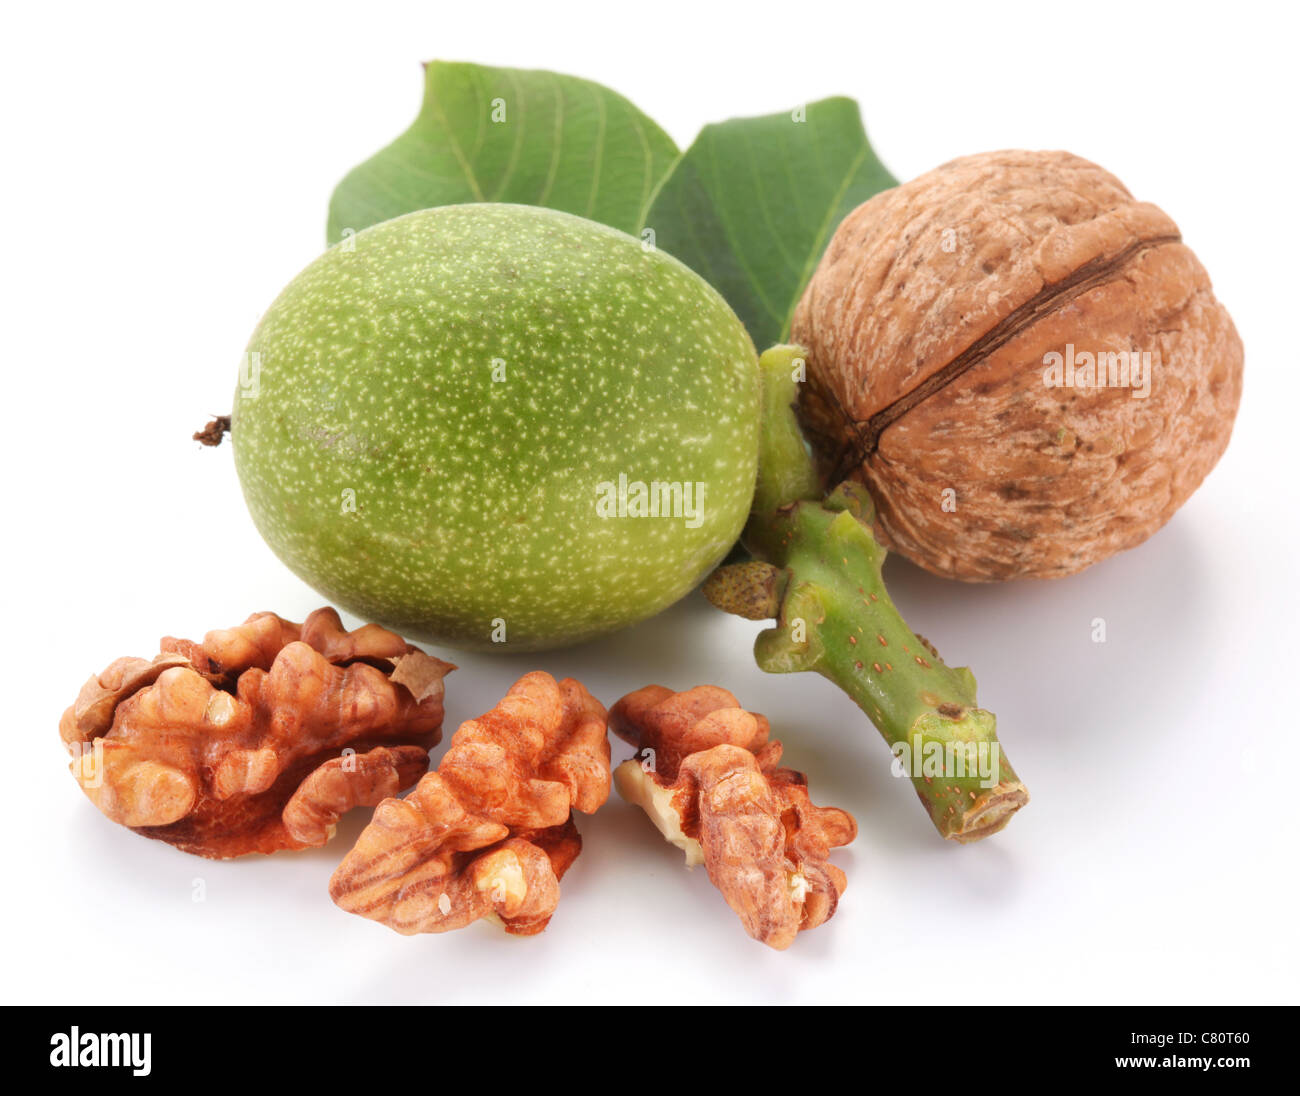 Green walnut; peeled walnut and its kernels. Isolated on a white background. Stock Photo